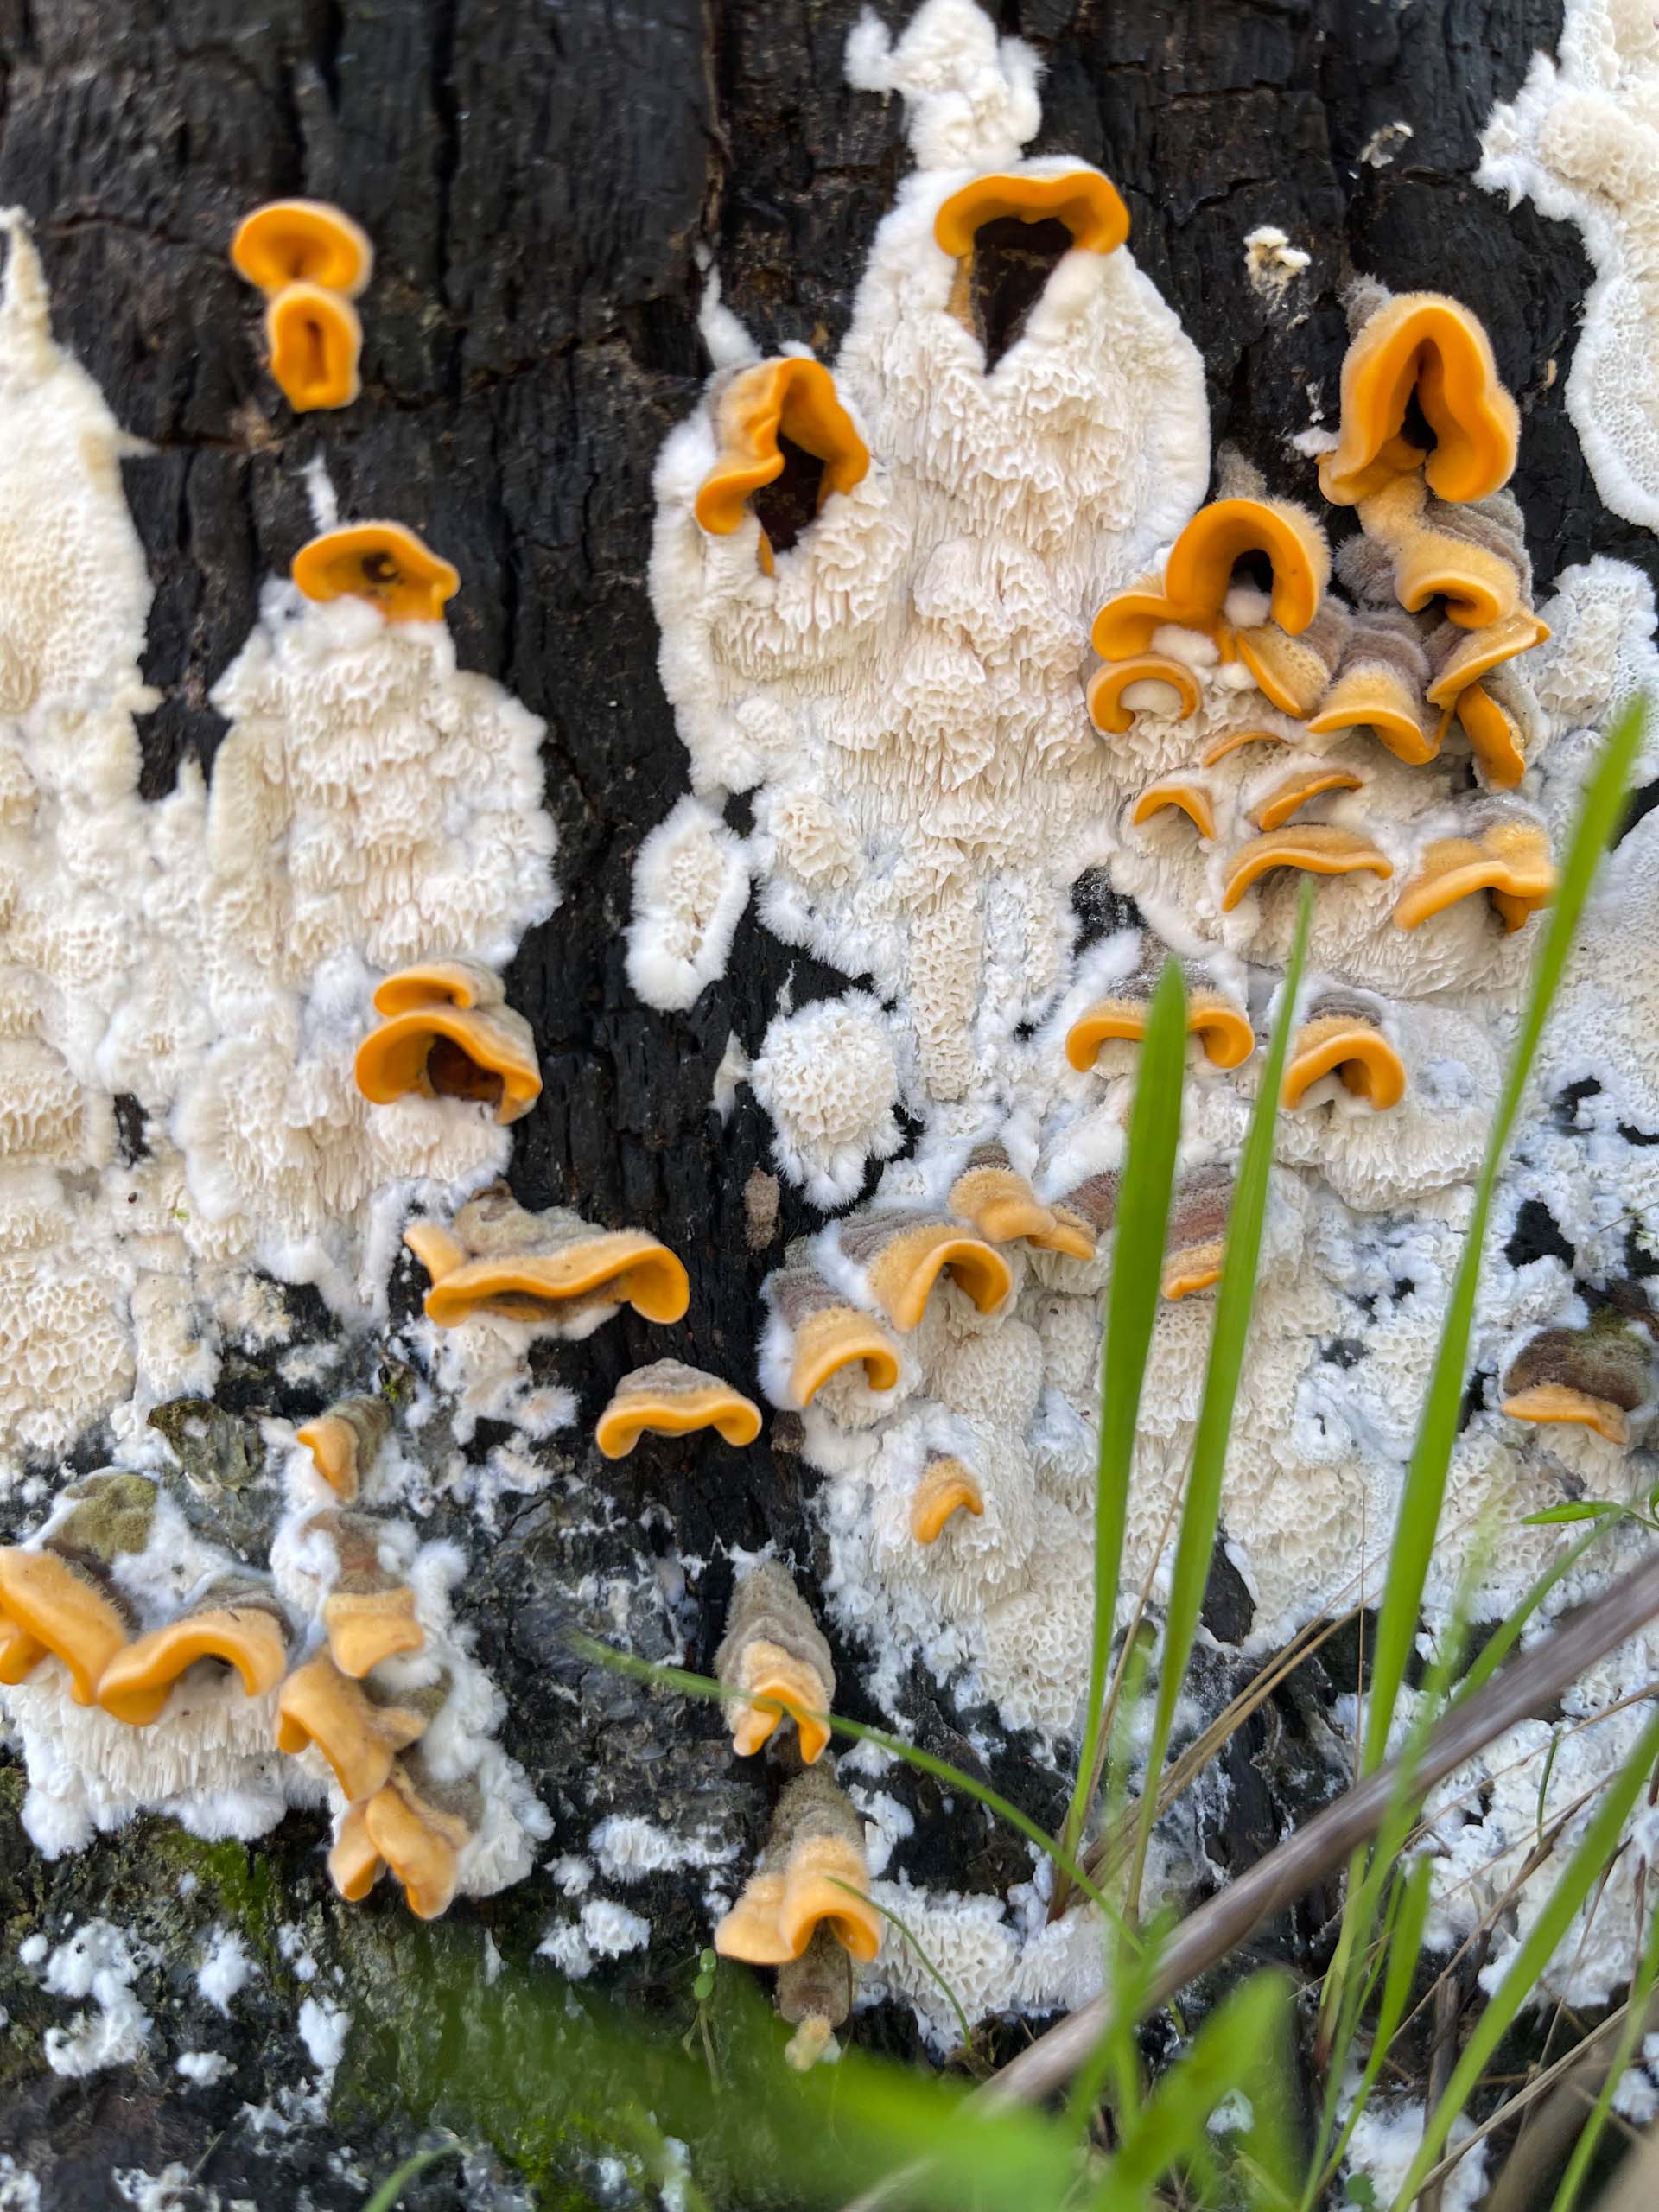 Unknown fungus. C. Harvey.